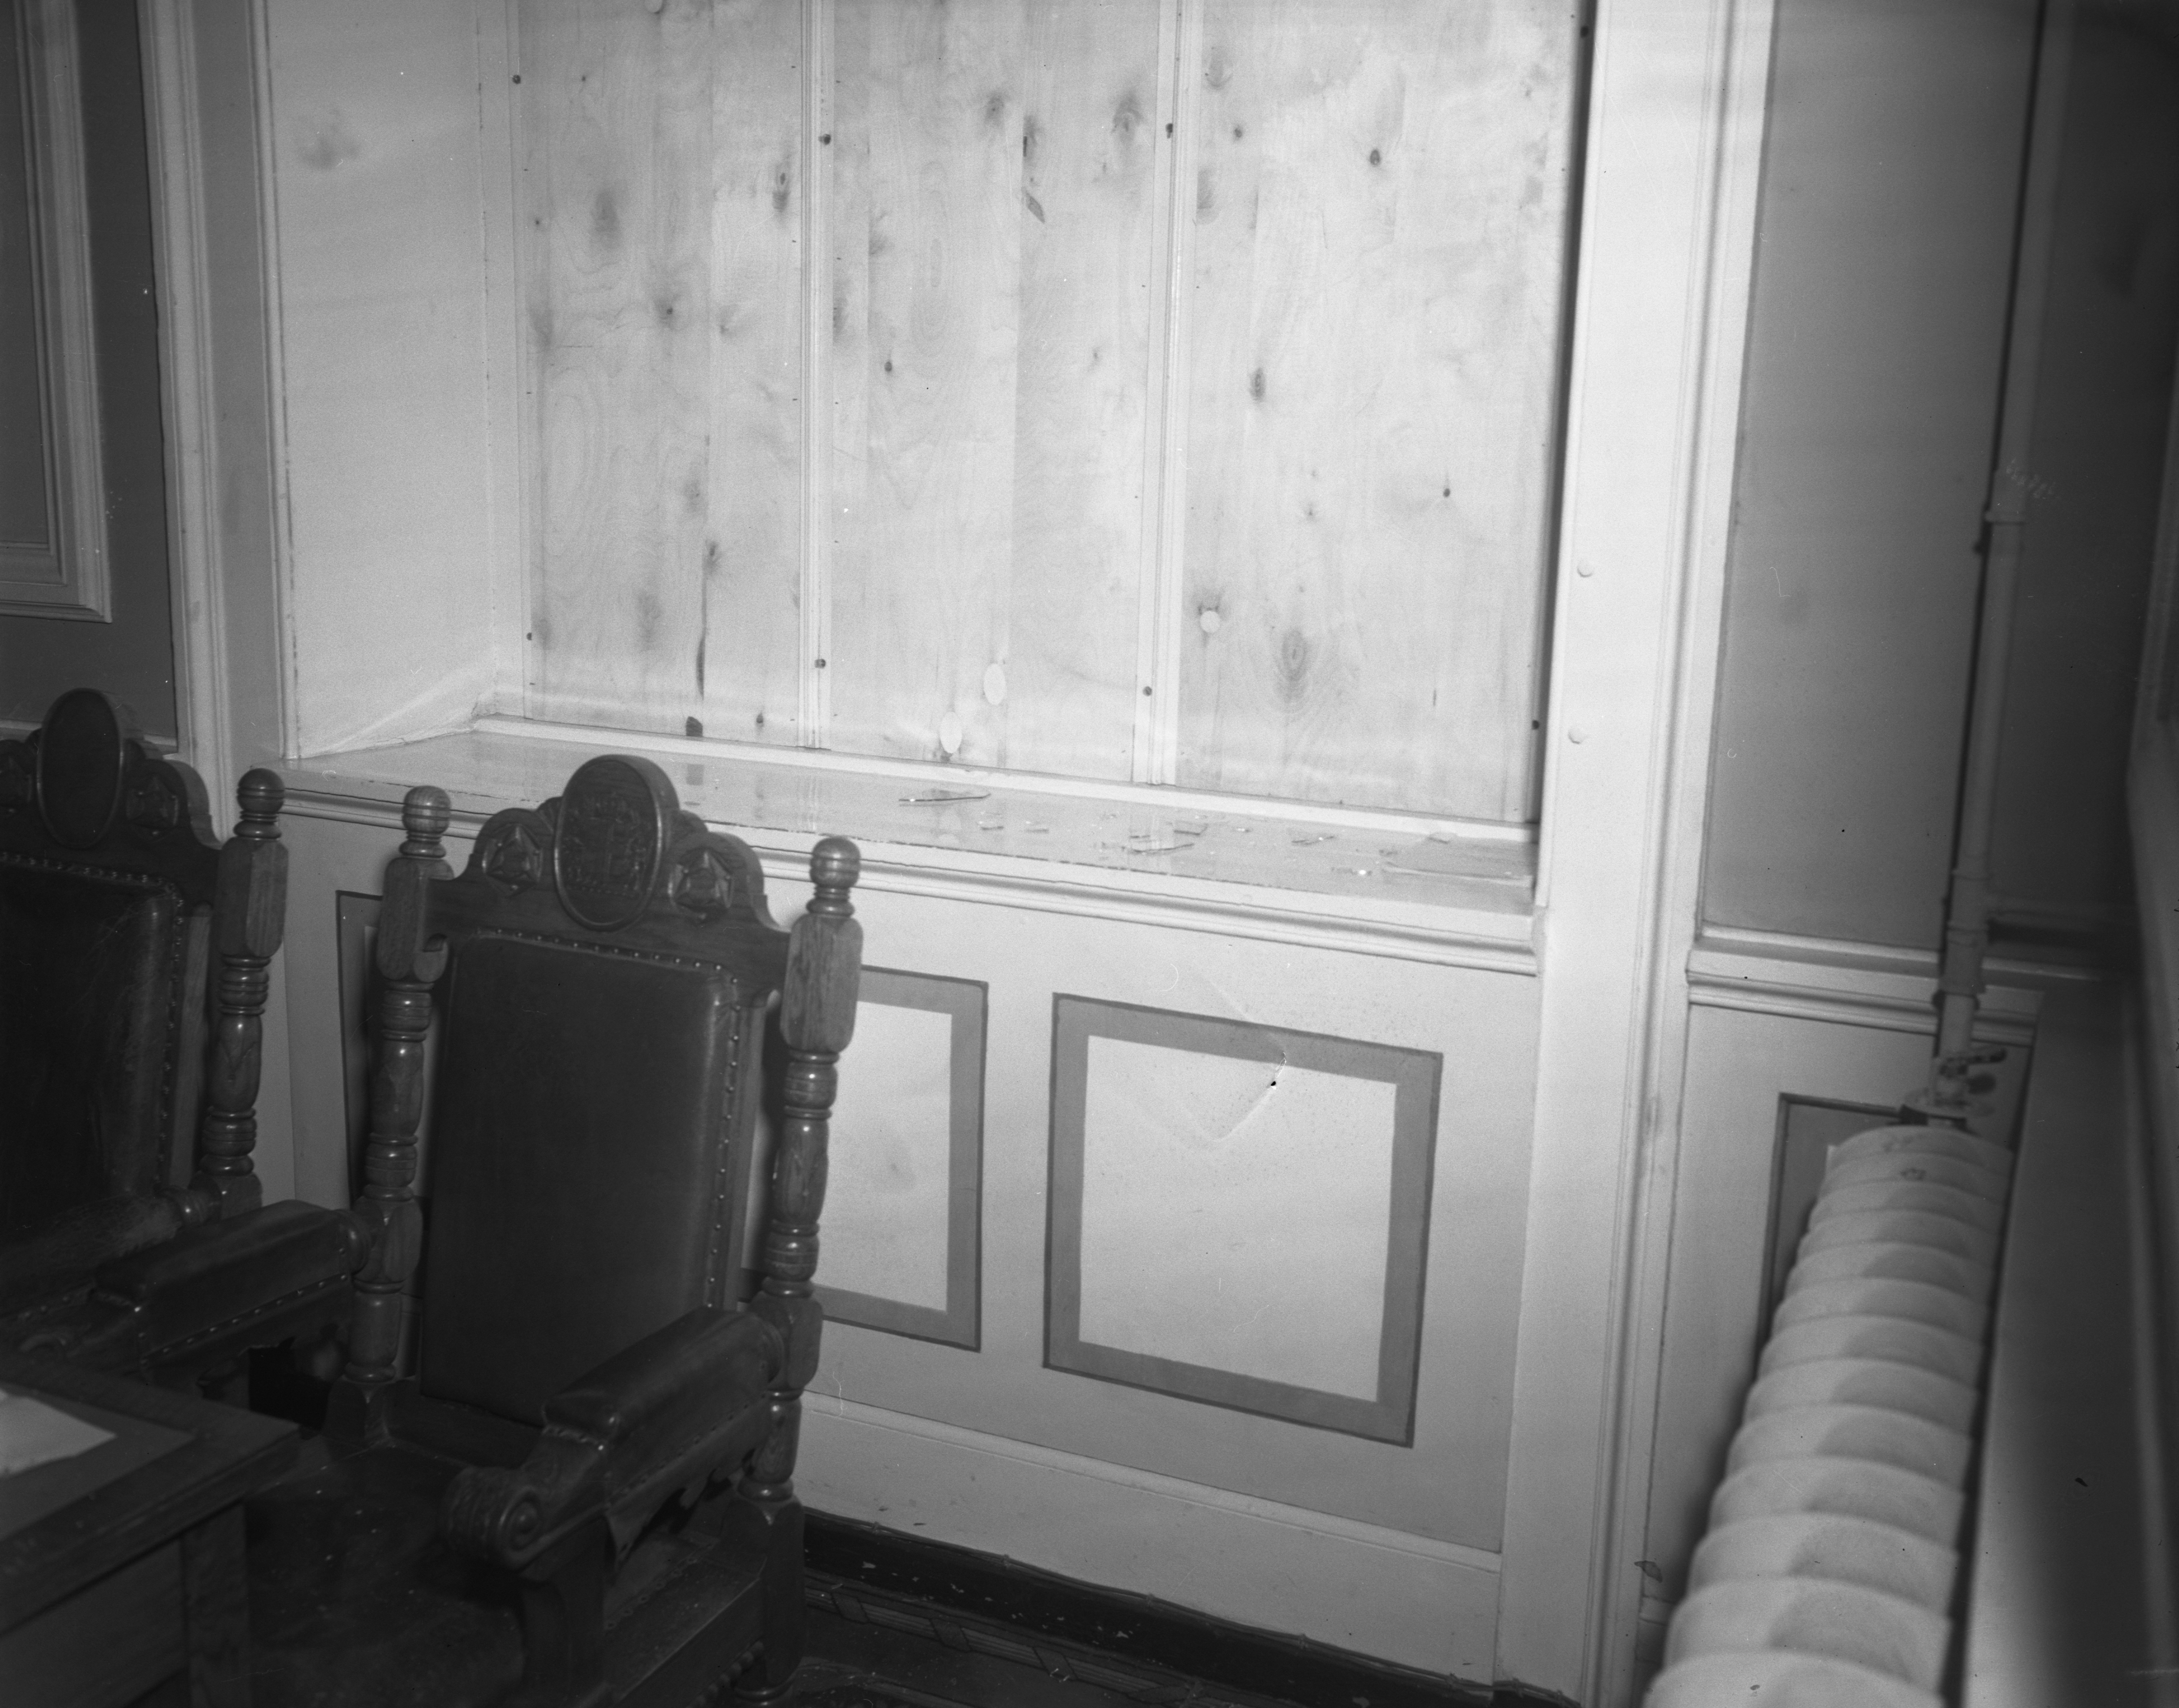 File:1949-althingi-barricaded-window.jpg - Wikimedia Commons